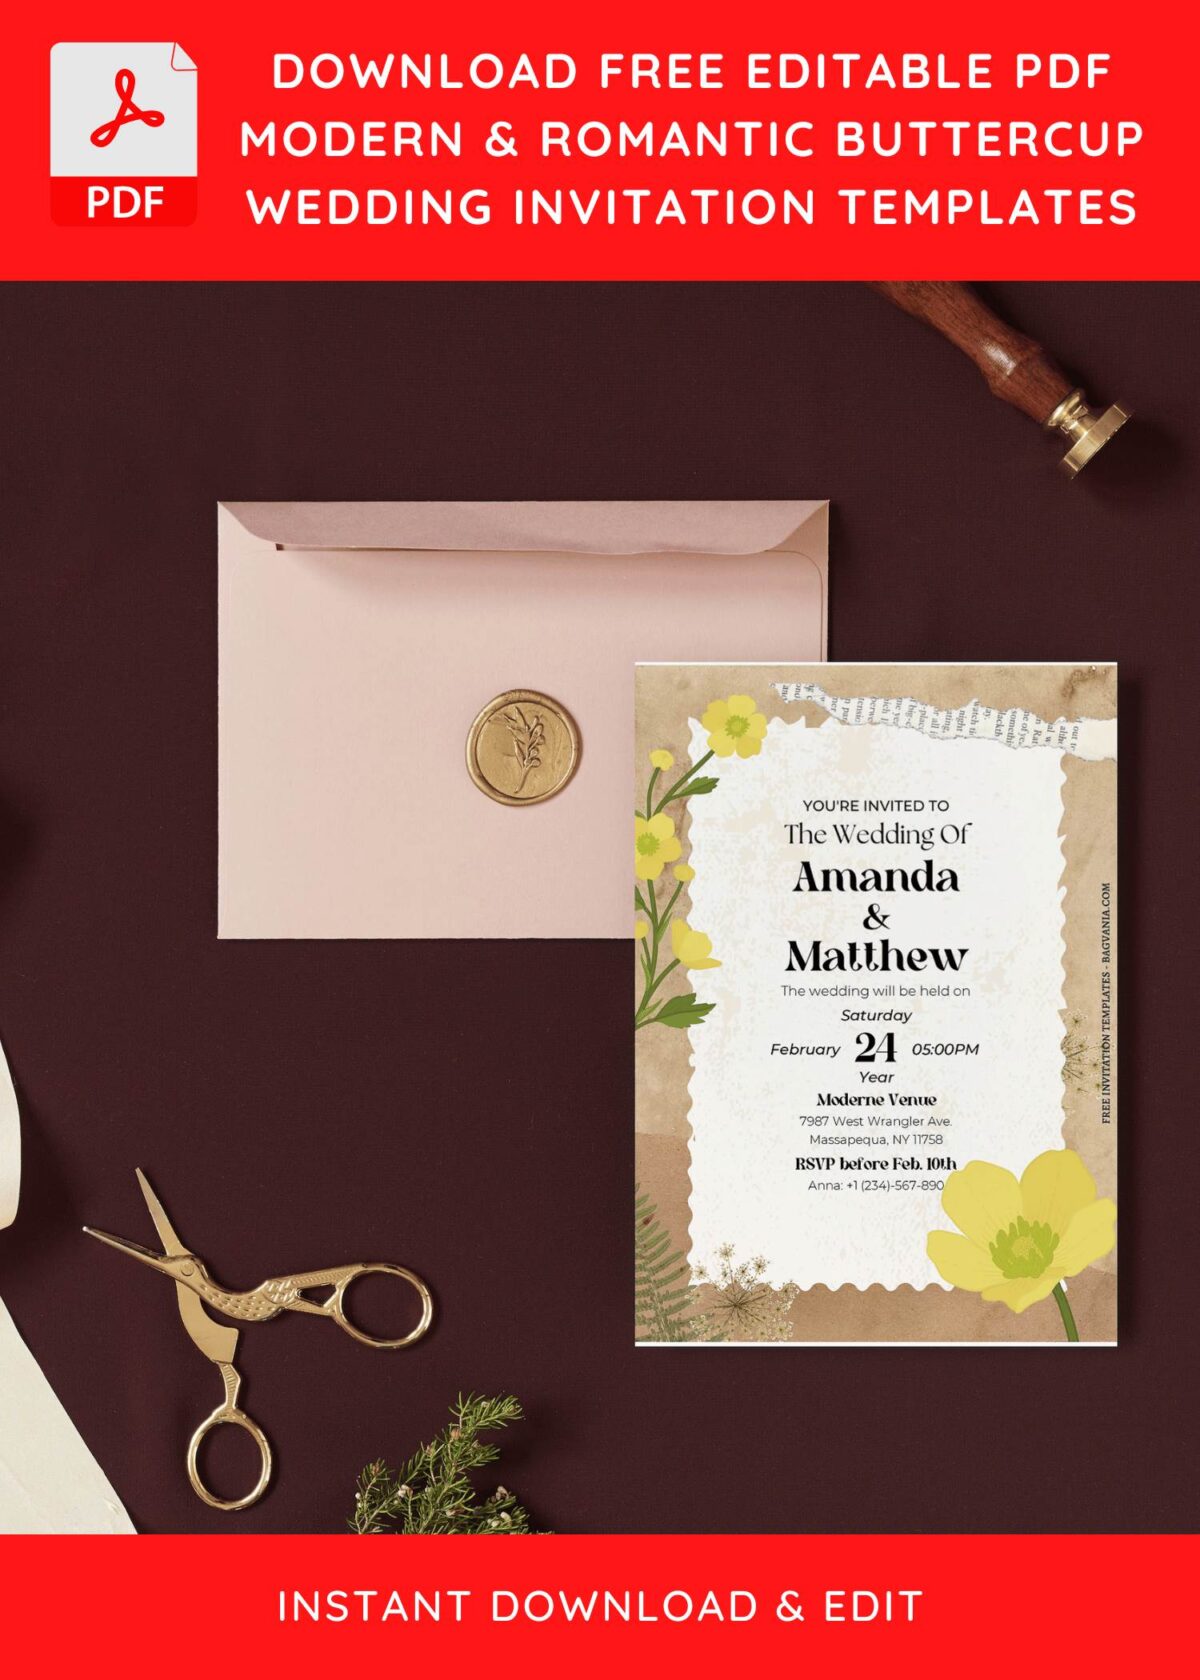 (Free Editable PDF) Rustic Vintage ButterIcup Wedding Invitation Templates 